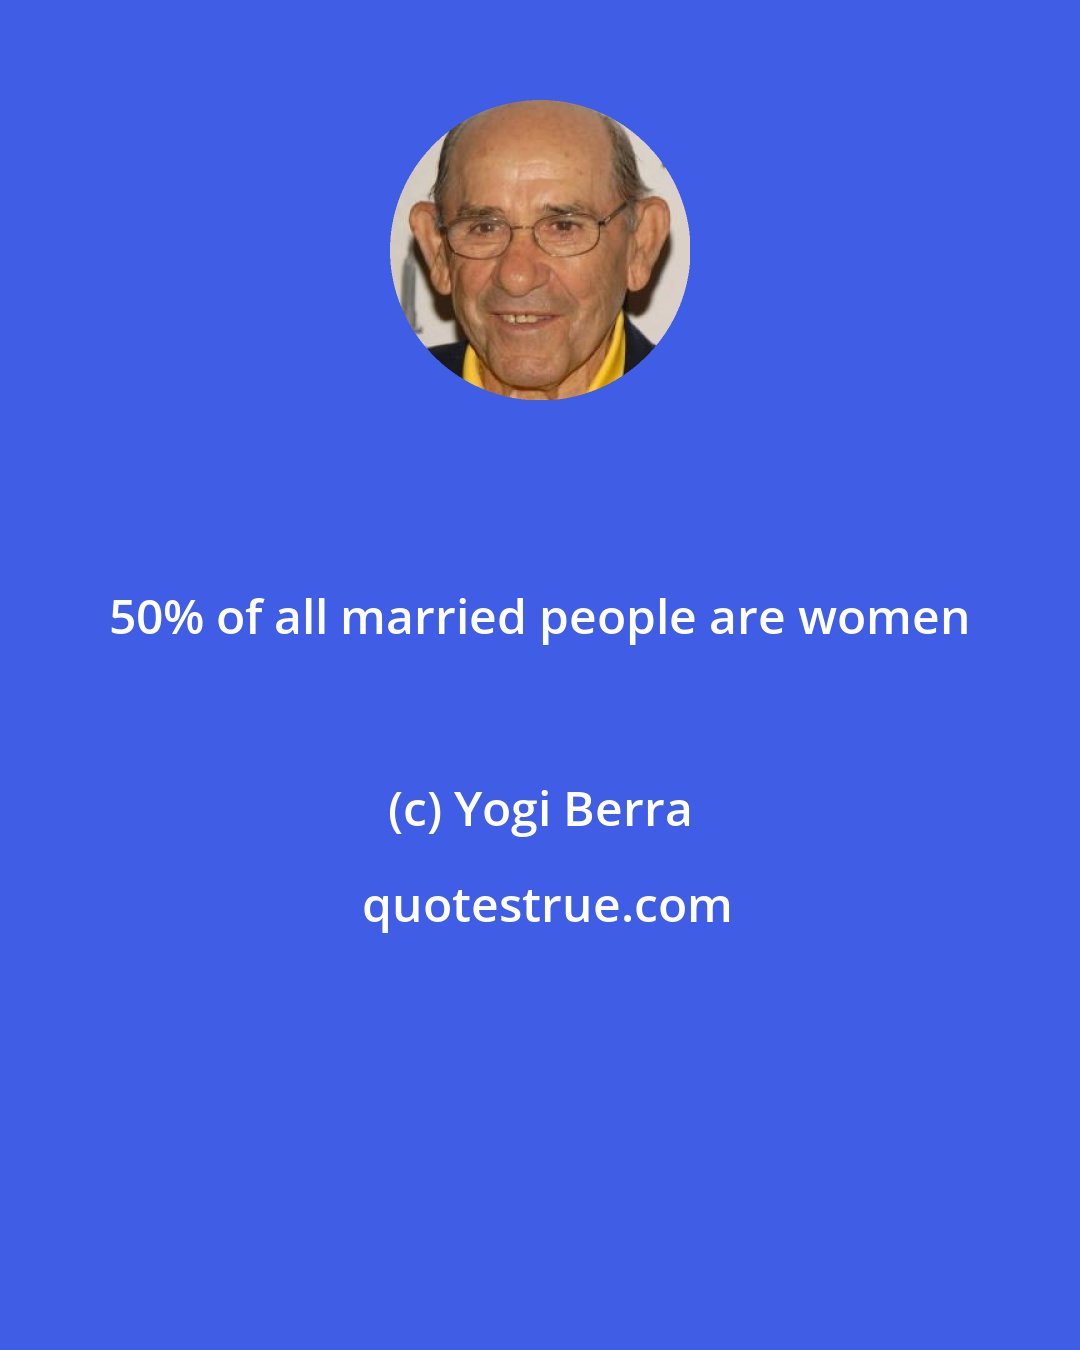 Yogi Berra: 50% of all married people are women